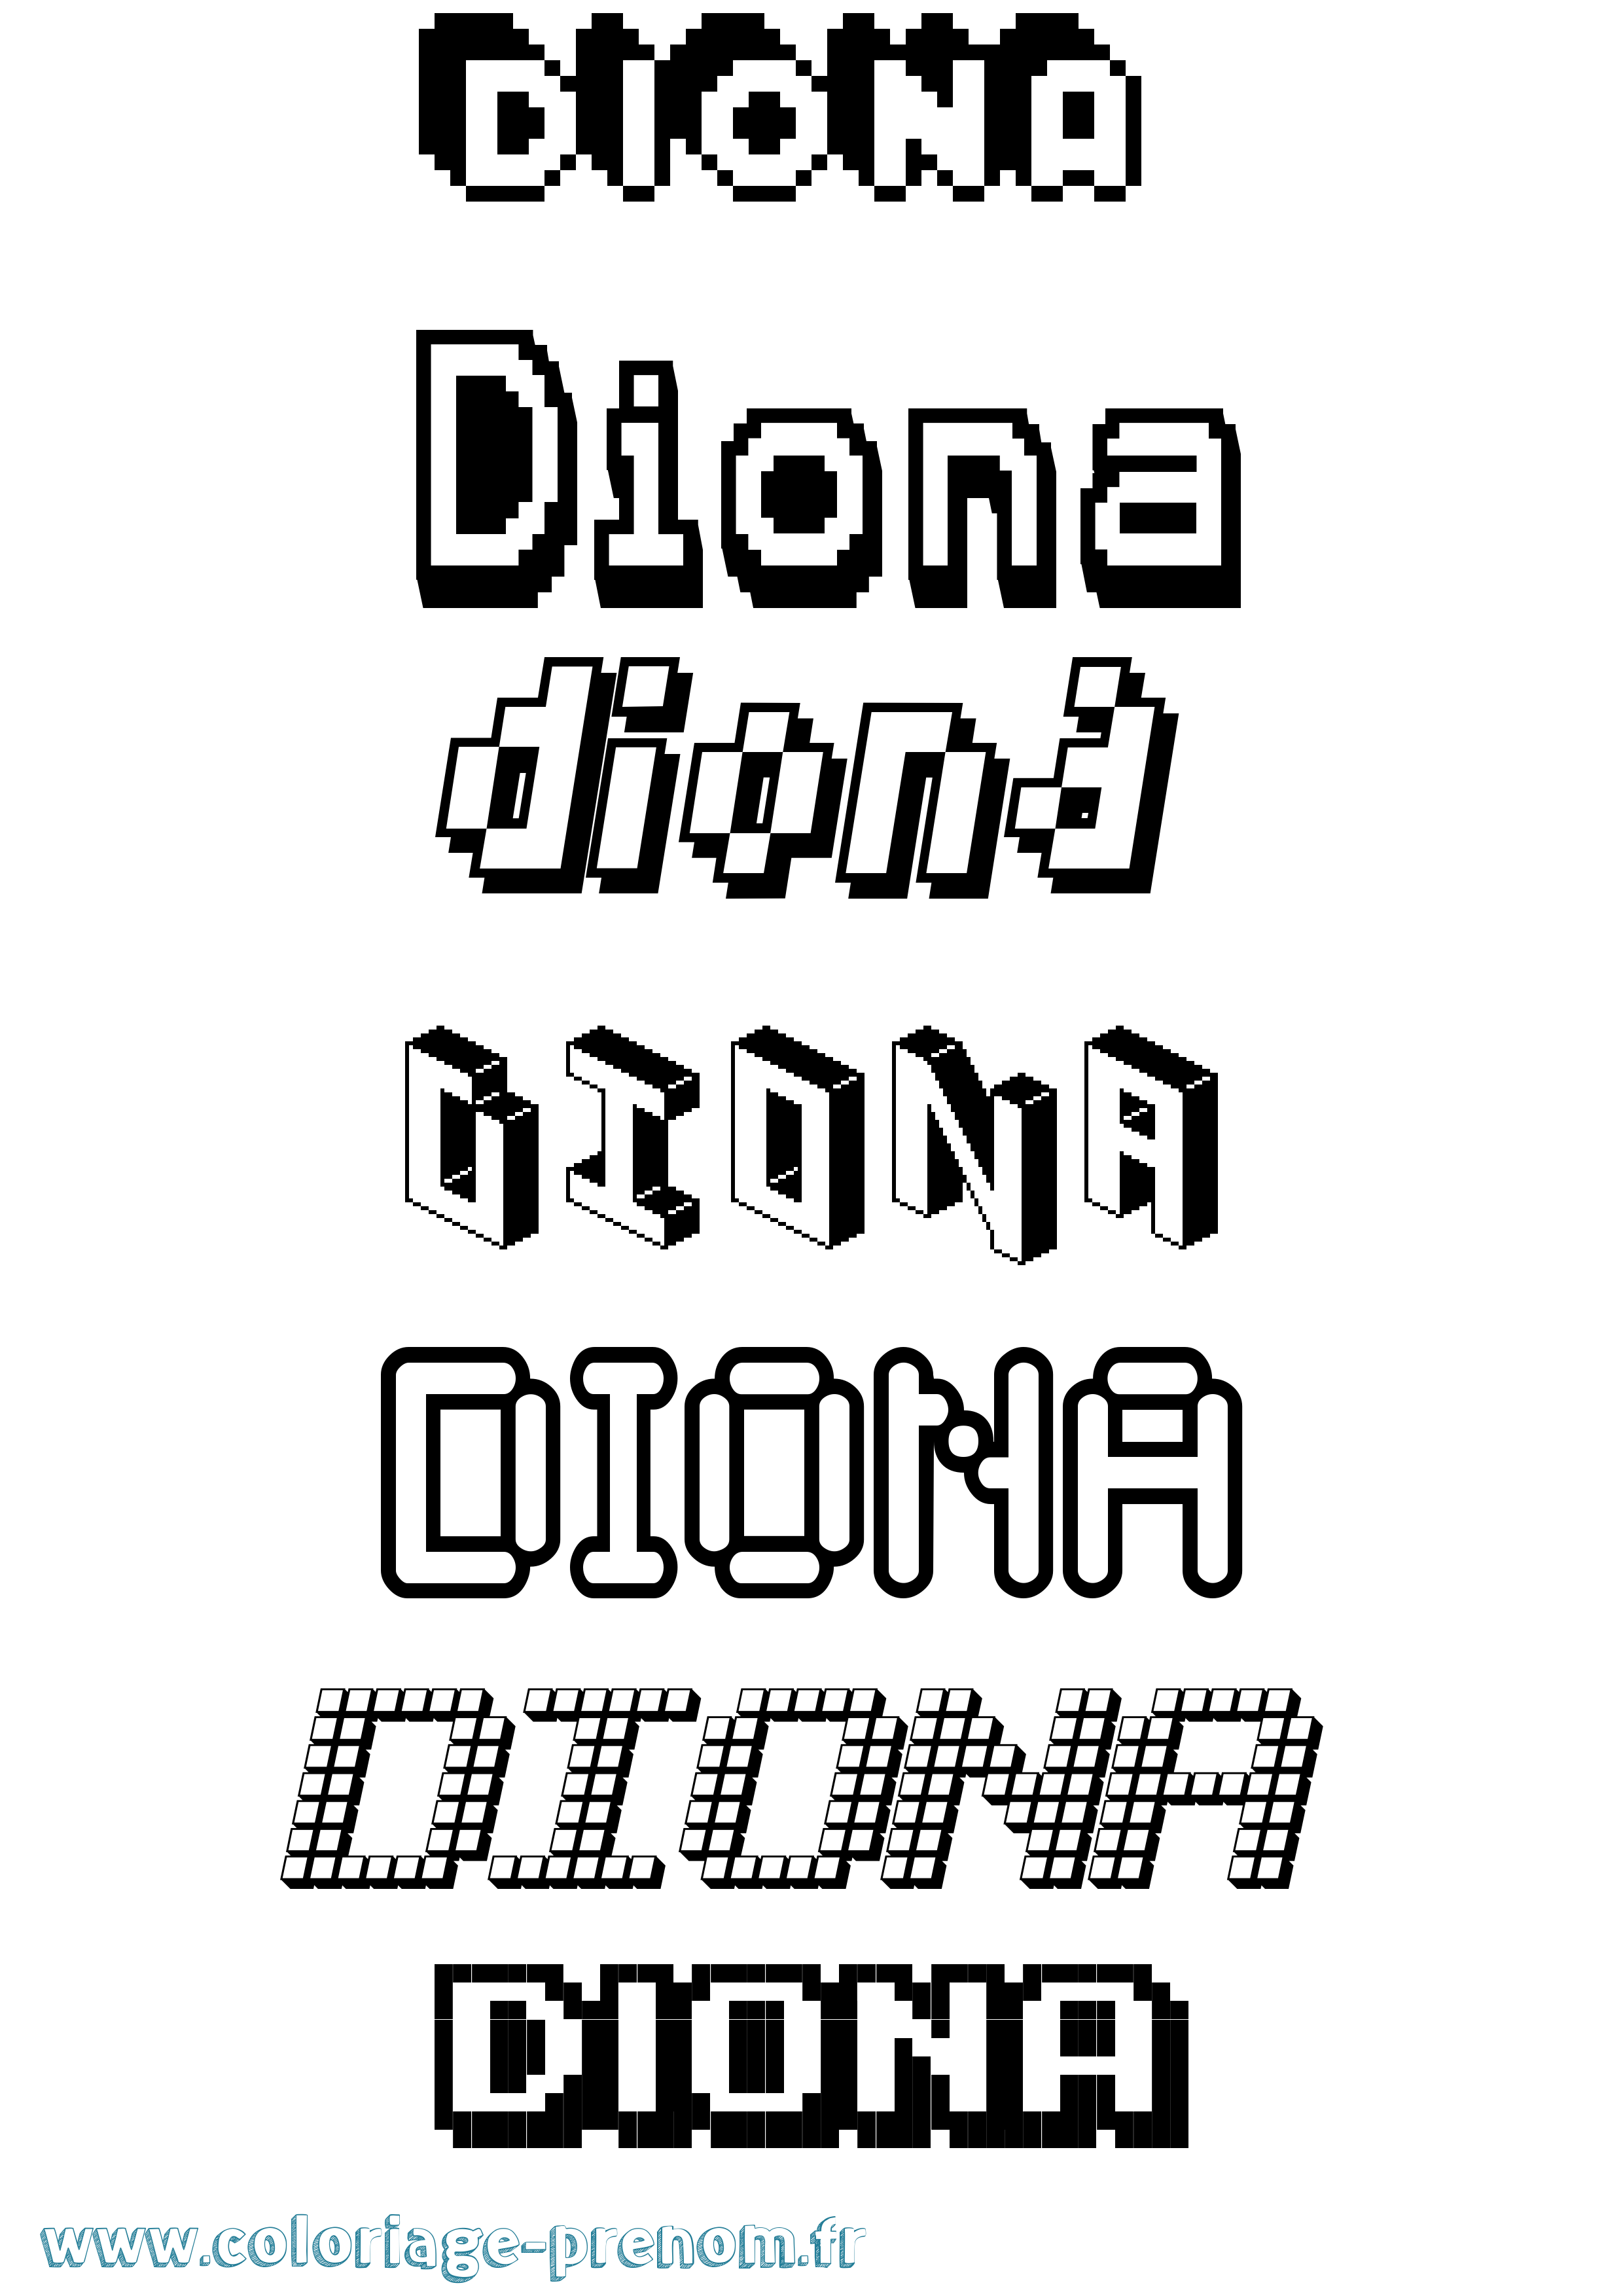 Coloriage prénom Diona Pixel